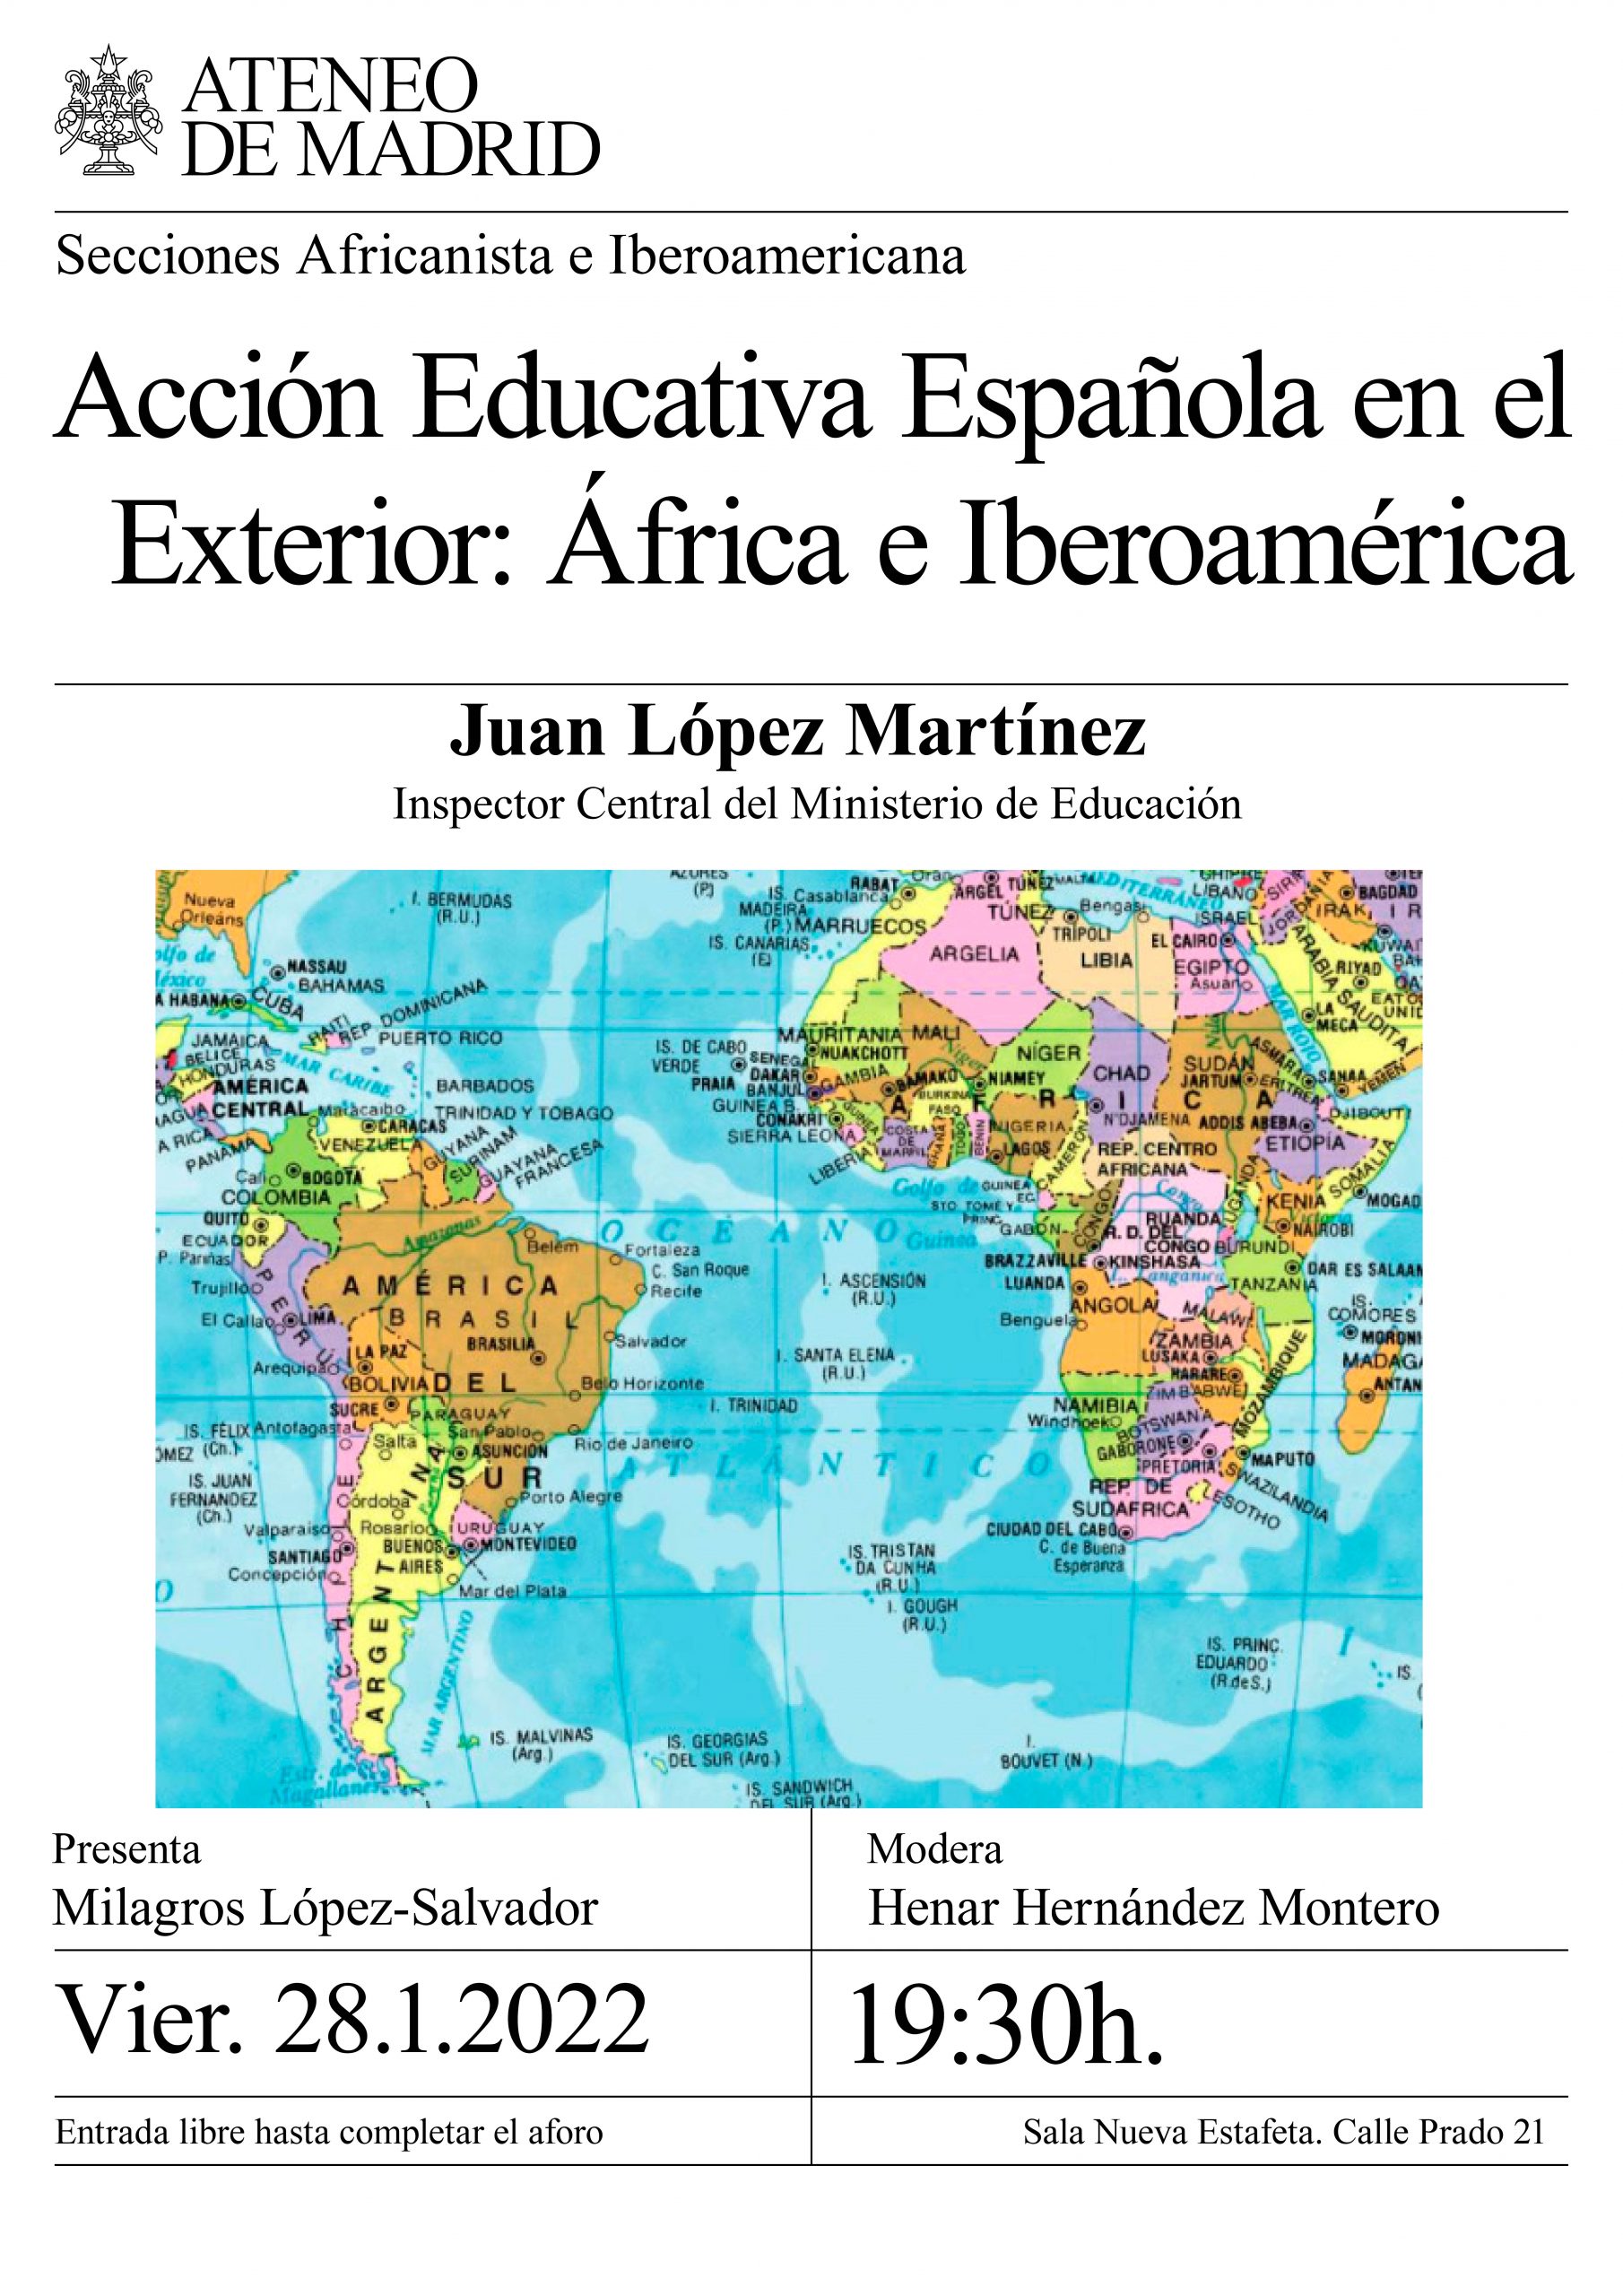 Acción Educativa Española en el Exterior: África e Iberoamérica. Interviene Juan López Martínez